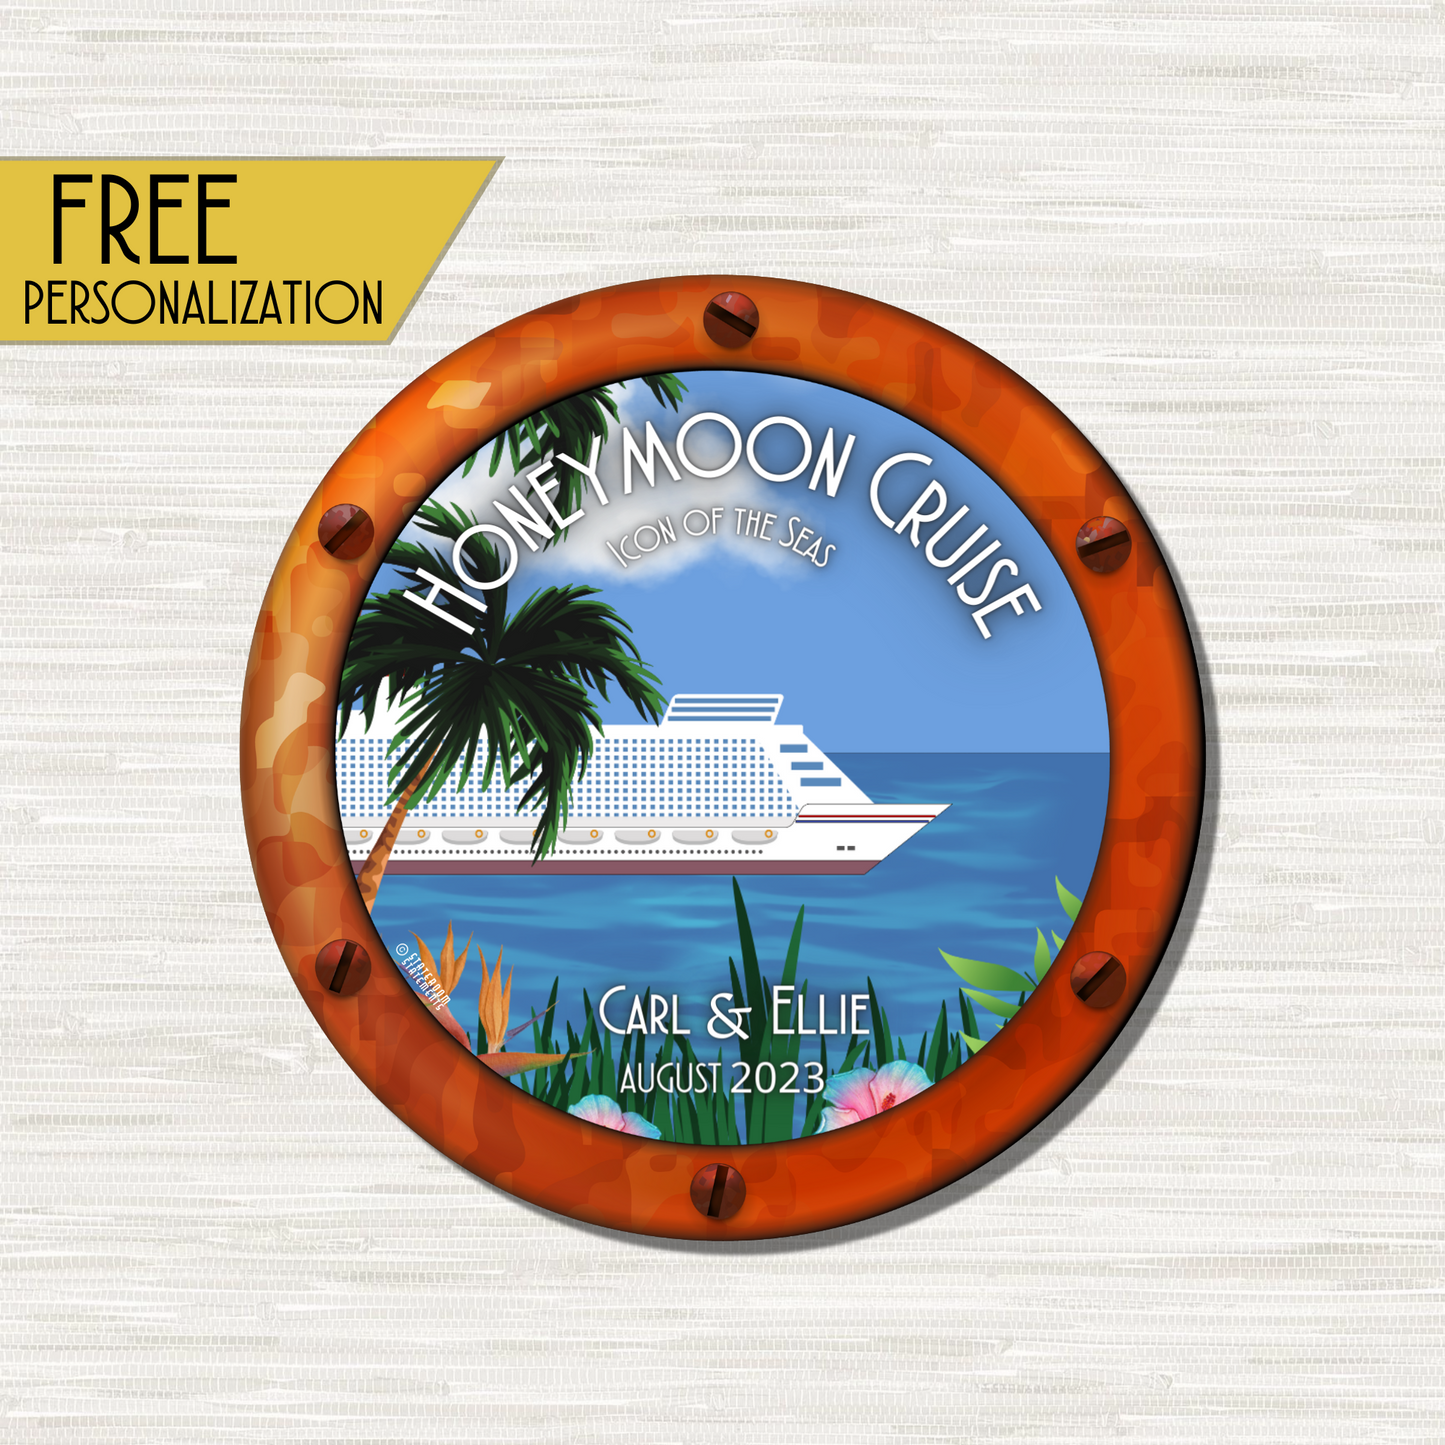 Honeymoon Cruise - Personalized Cruise Door Magnet